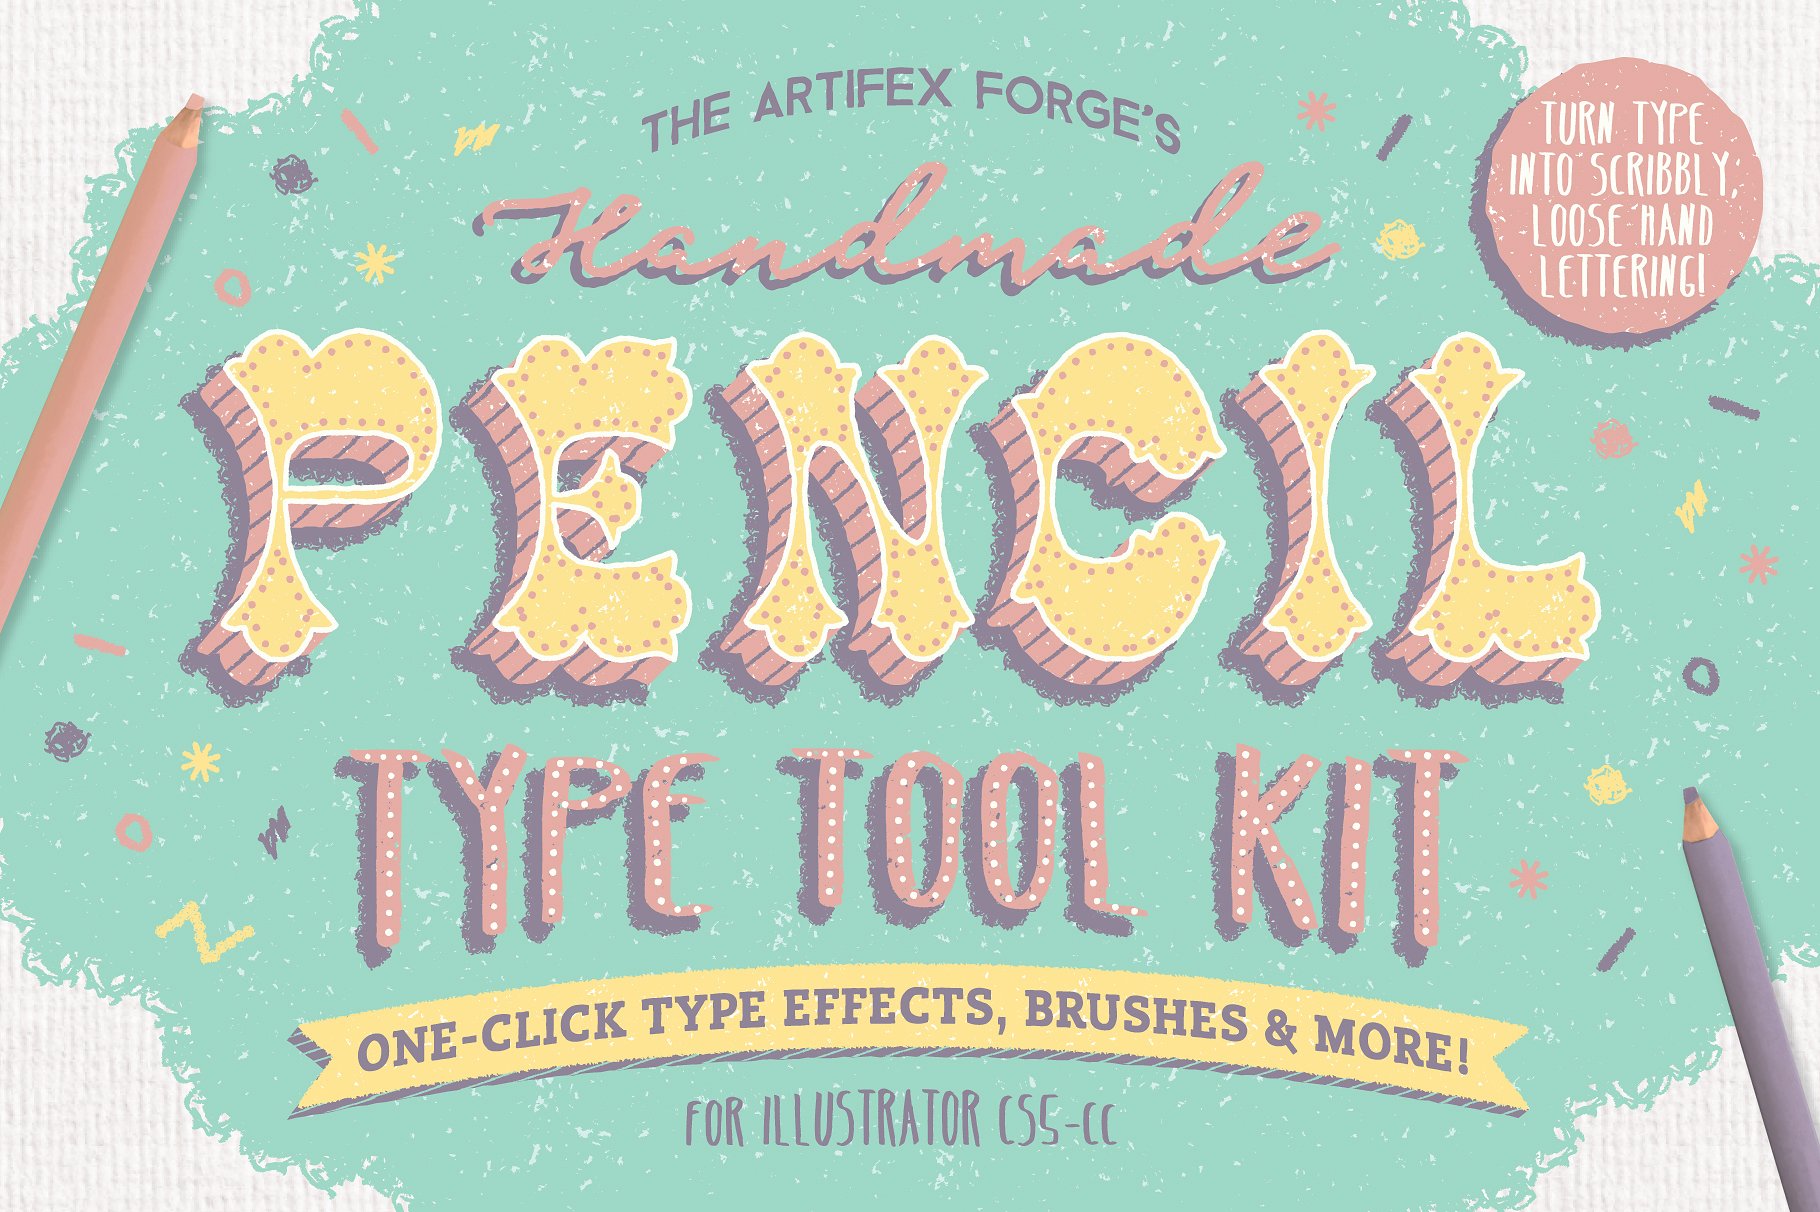 铅笔手绘风格图层样式 The Hand-drawn Pencil Type Tool Kit插图